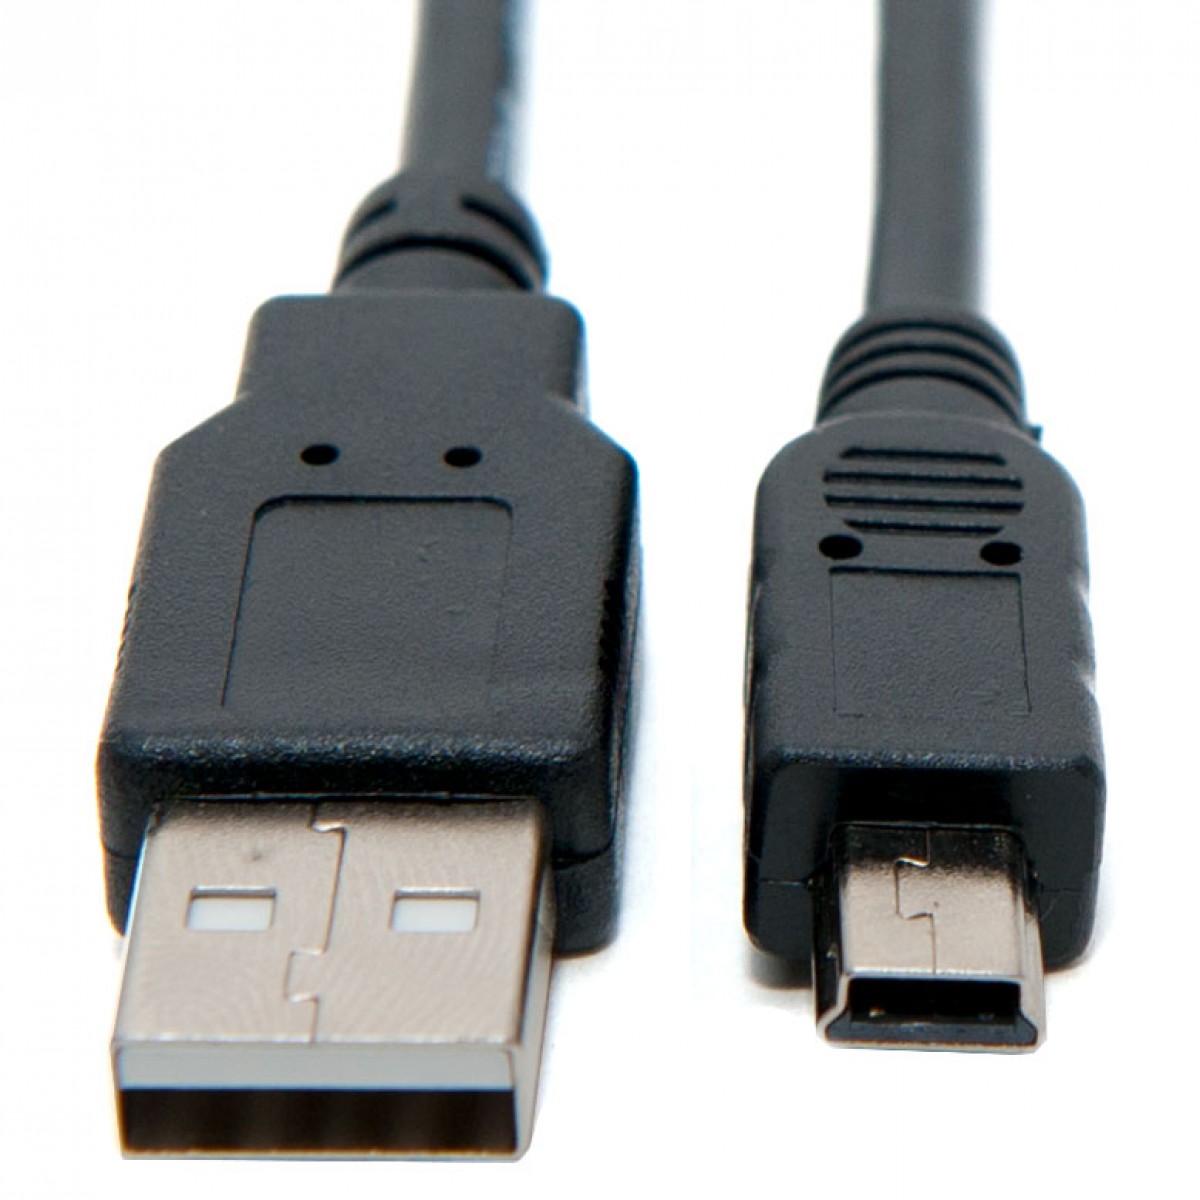 für FUJI FinePix S2960 USB Kabel Data Cable 